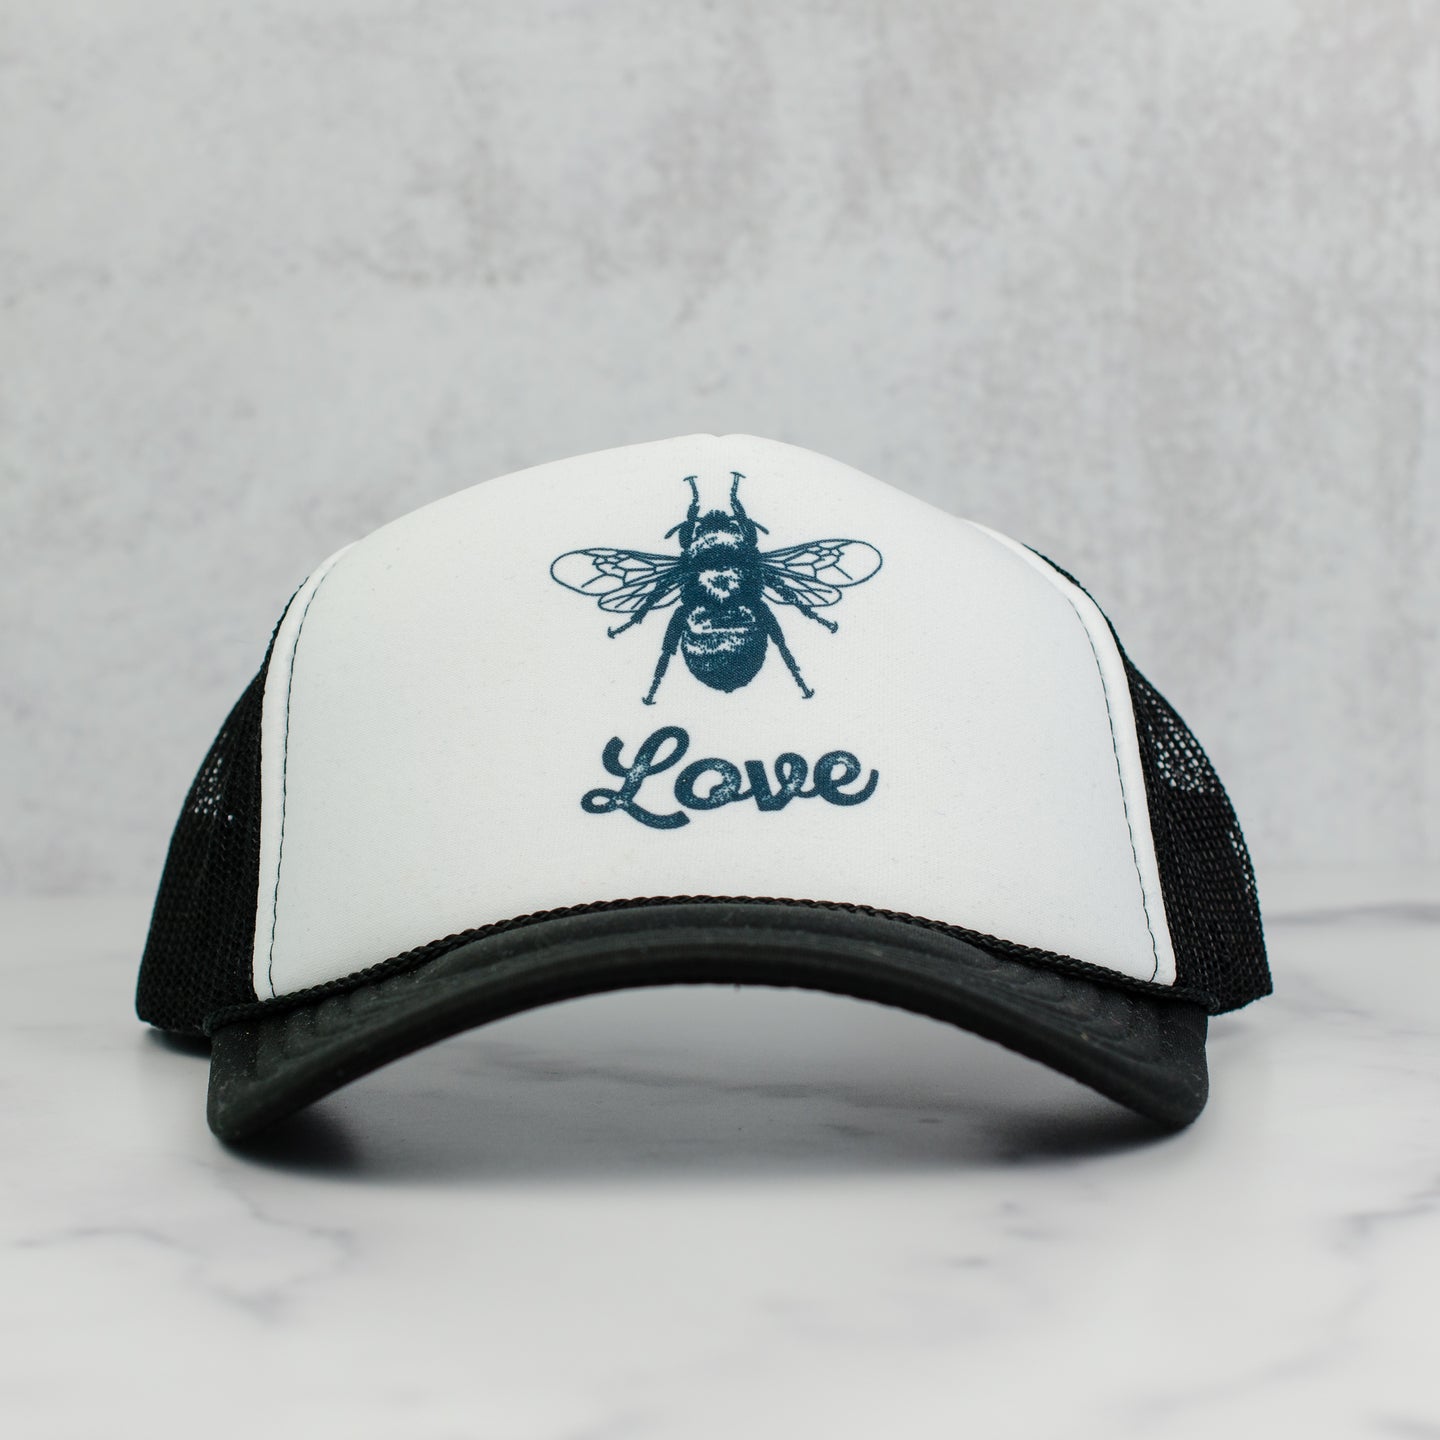 Bee love trucker hat, black and white